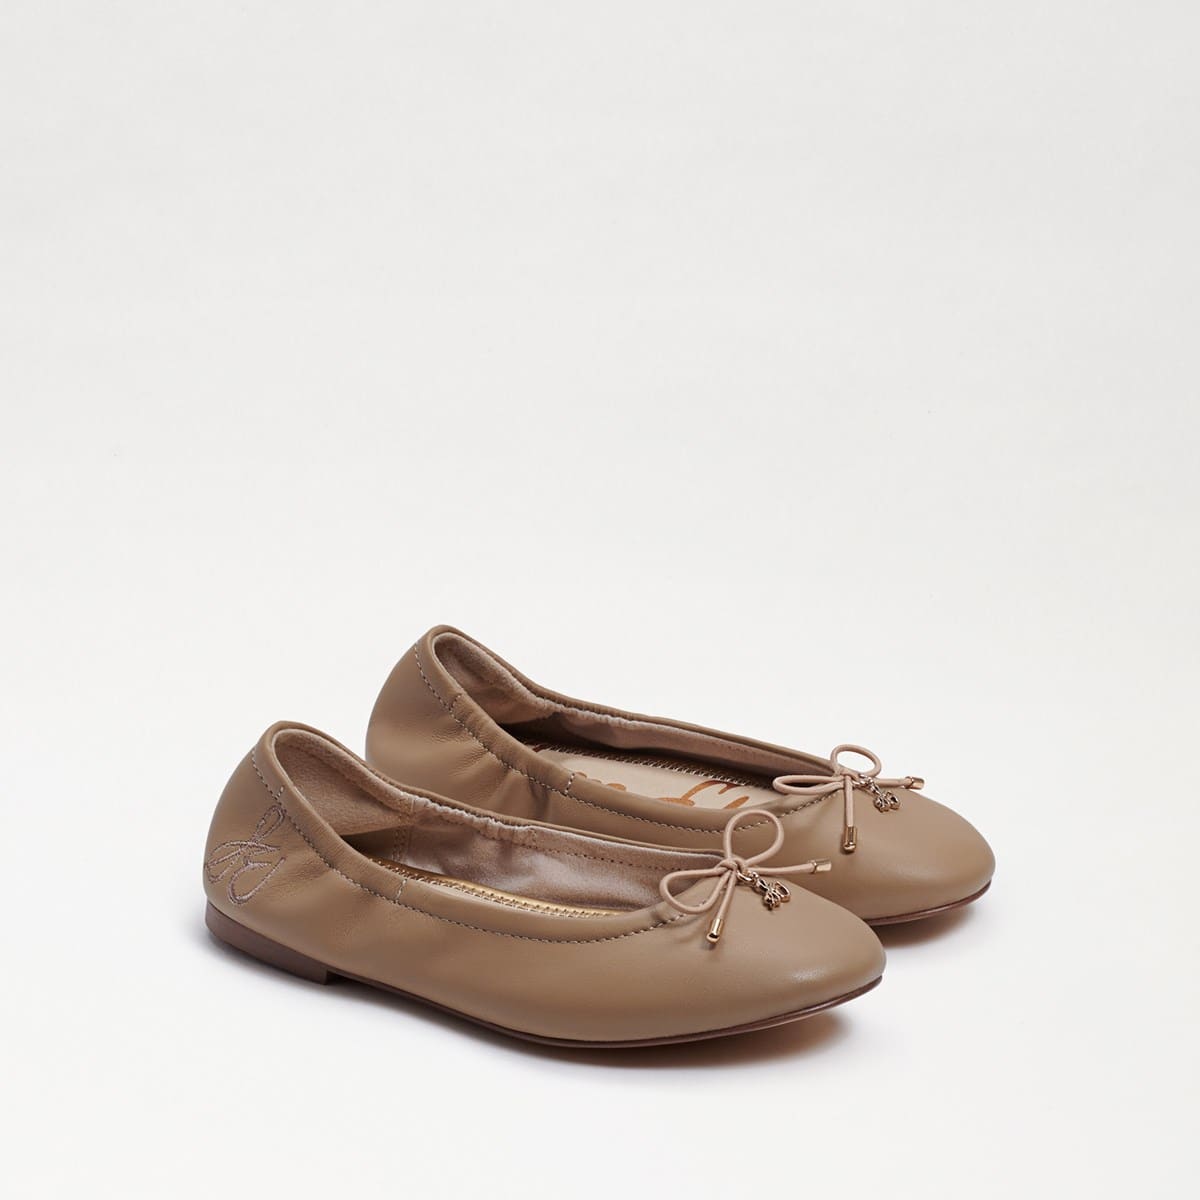 Sam Edelman Felicia Kids Ballet Flat Classic Nude Leather Q8nyKC